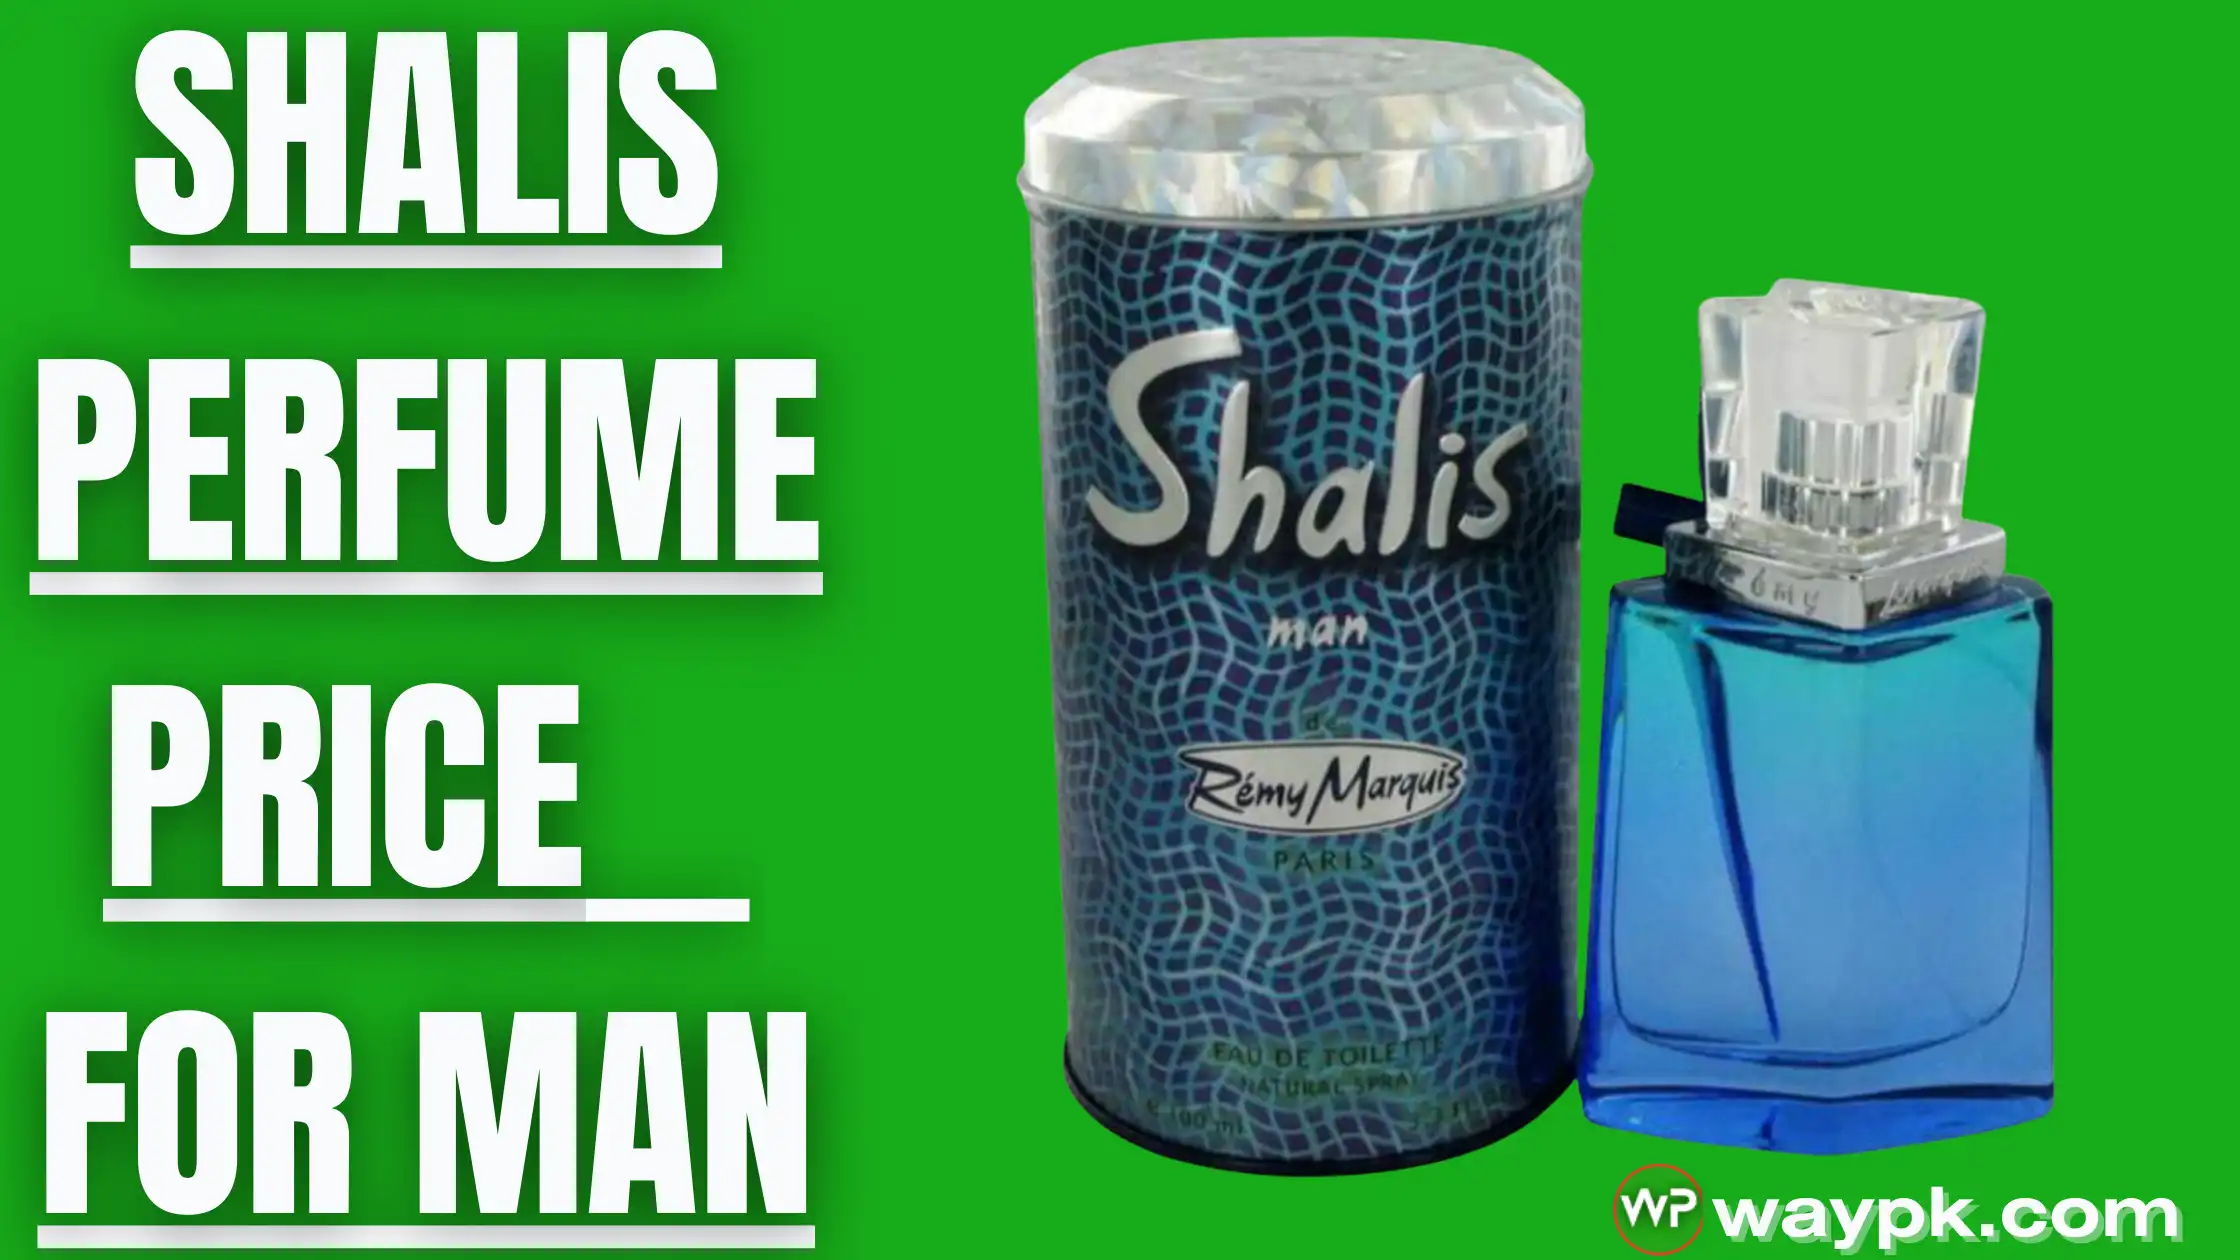 Shalis perfume price in Pakistan for man